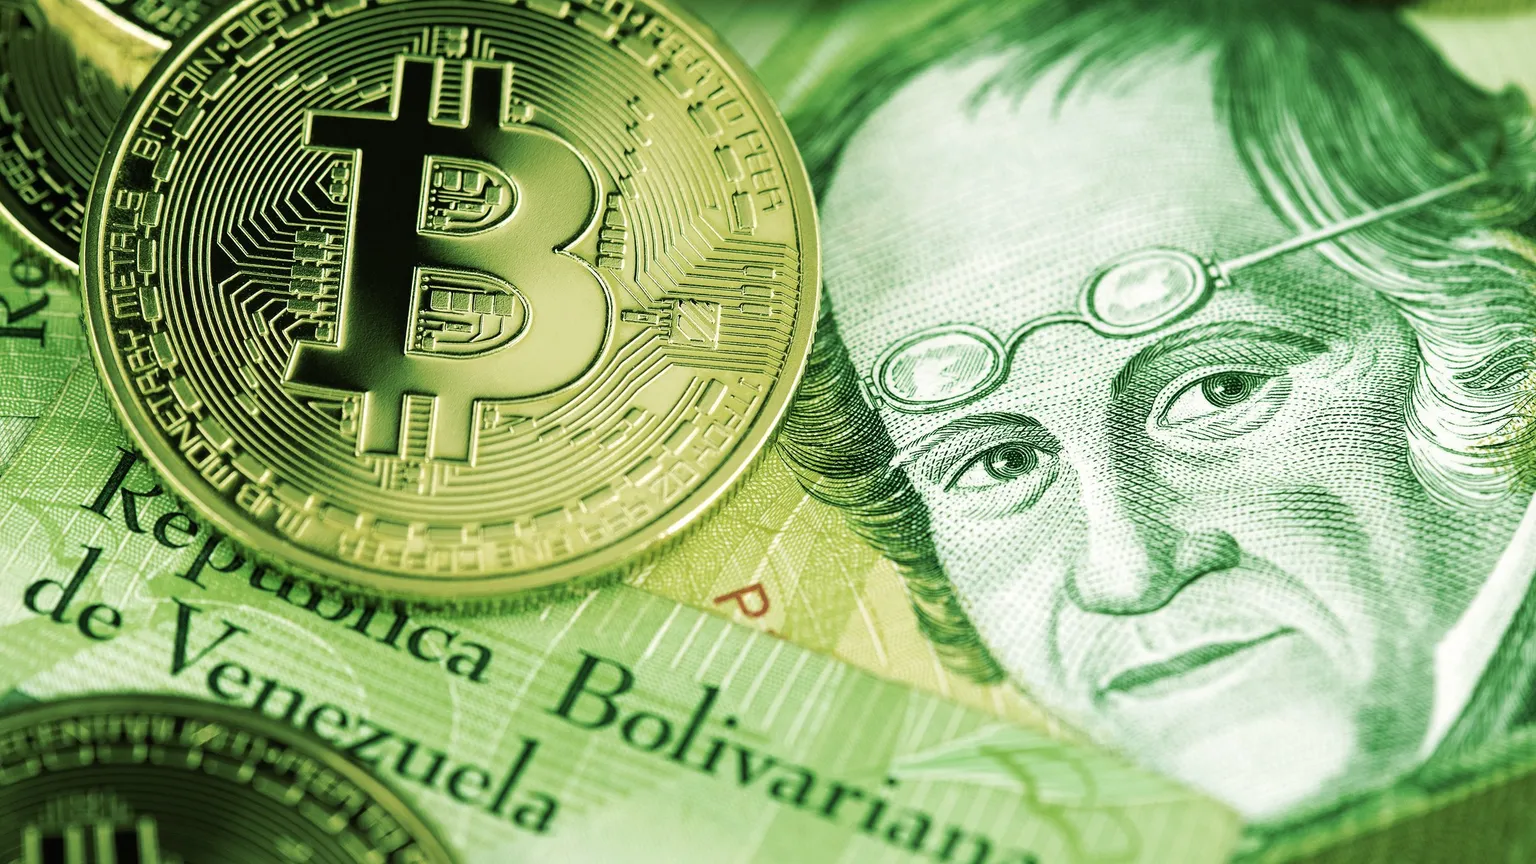 Bitcoin on Venezuela money Bolivar banknotes. Image: Shutterstock